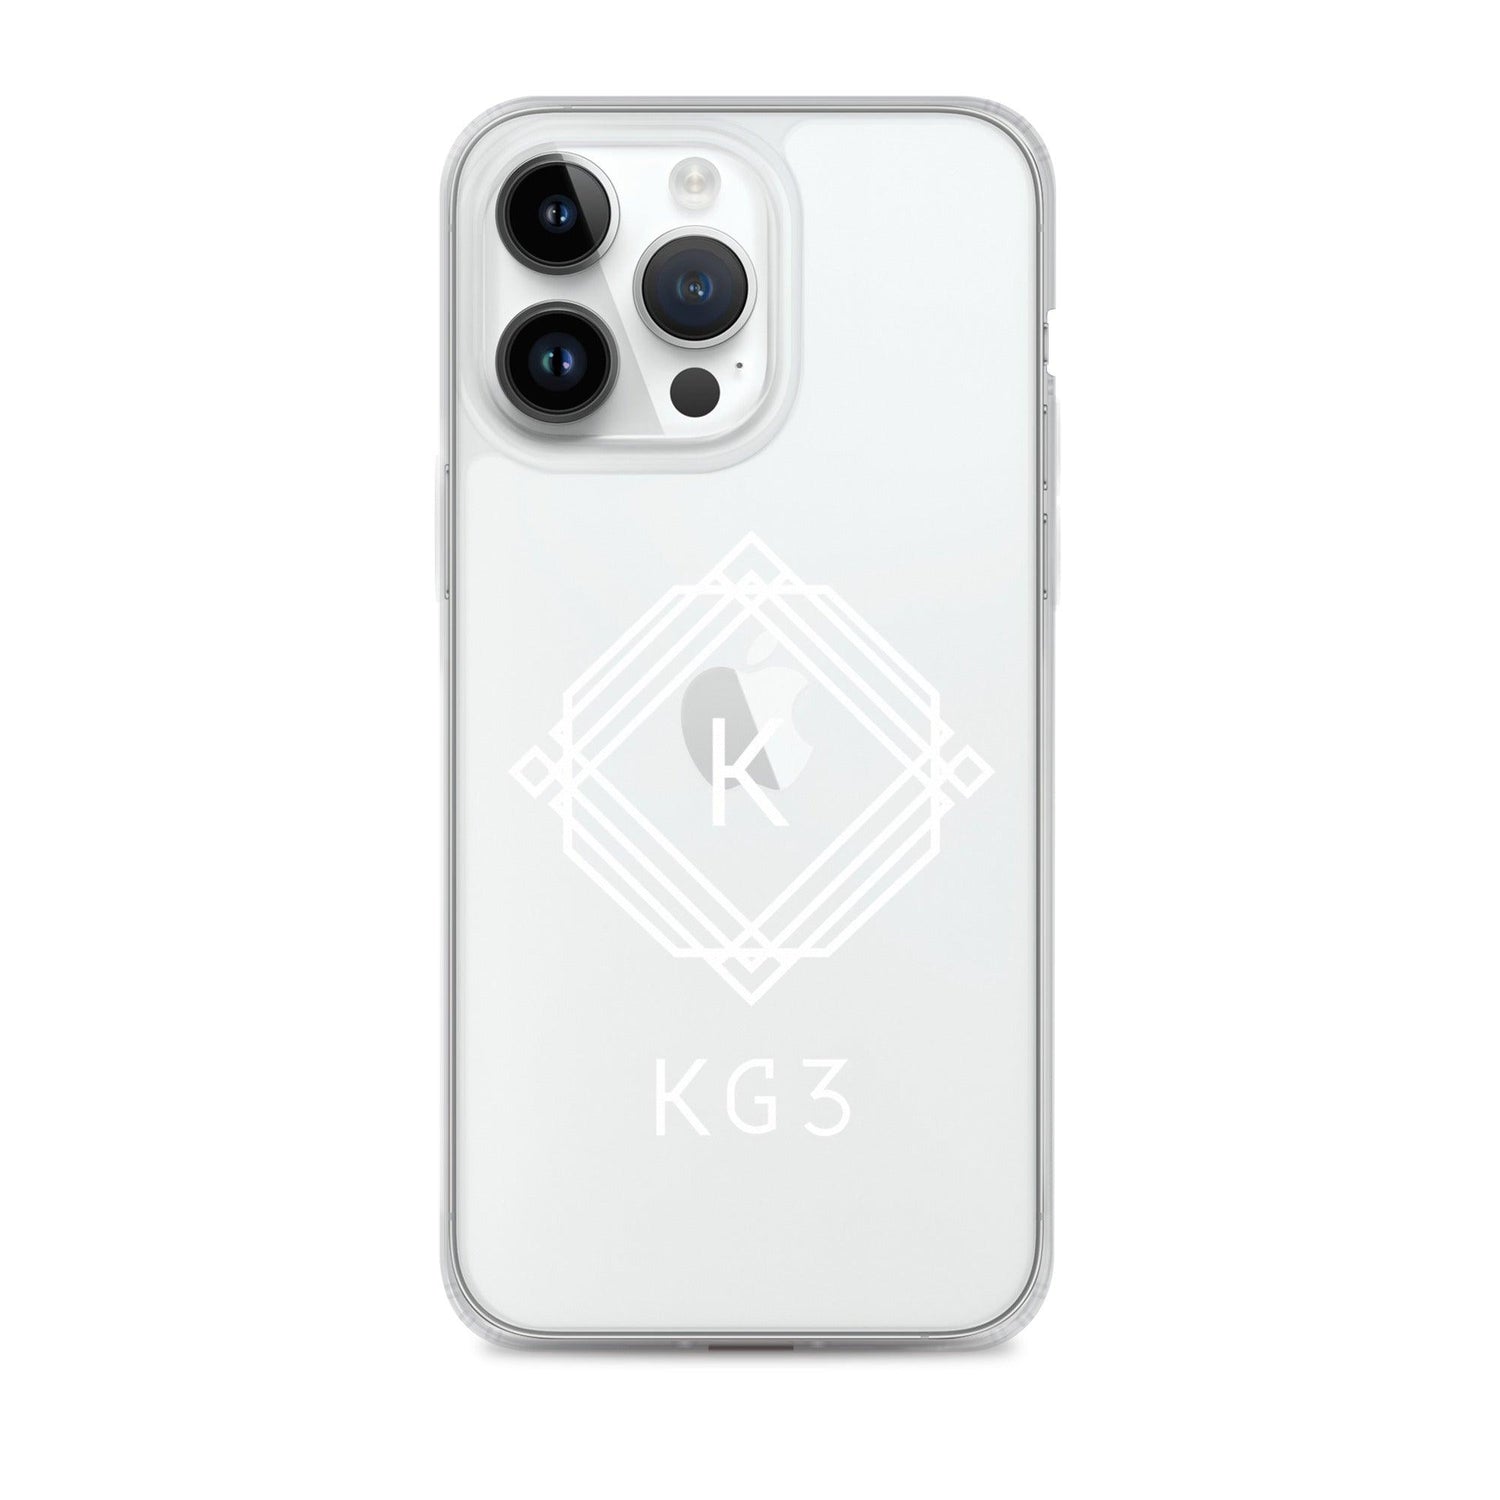 Kamonte Grimes "Kg3 Essential" iPhone® - Fan Arch